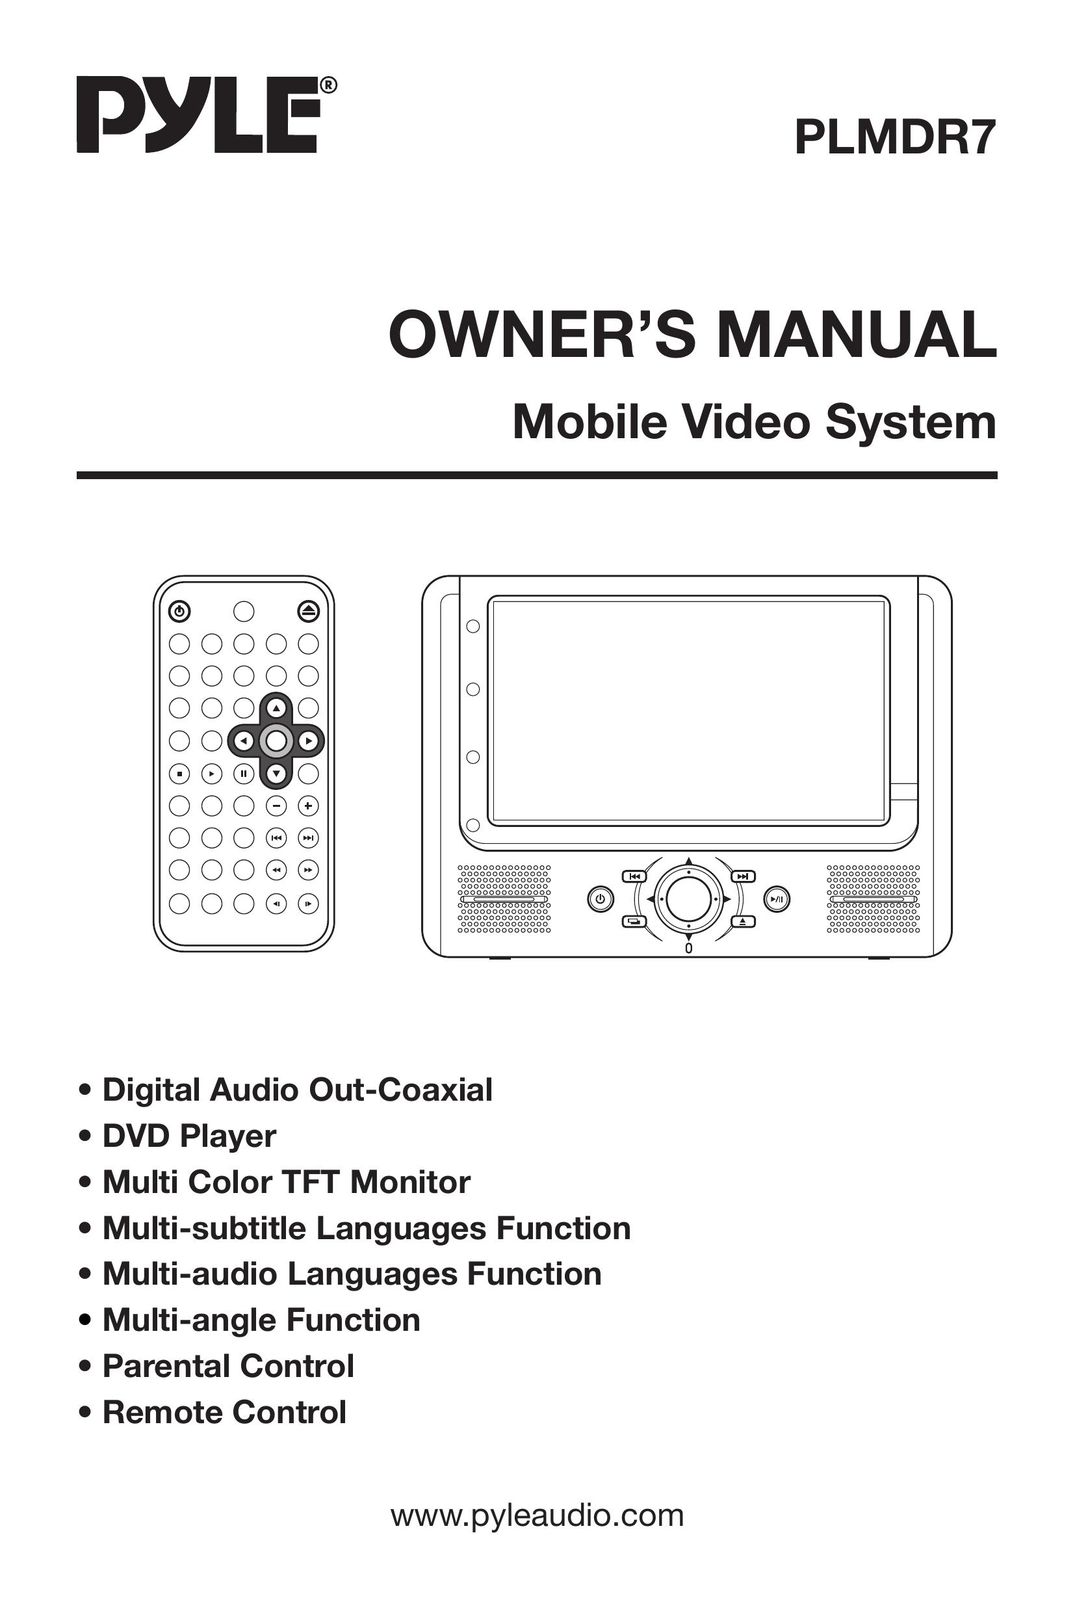 PYLE Audio PLMDR7 Car Video System User Manual